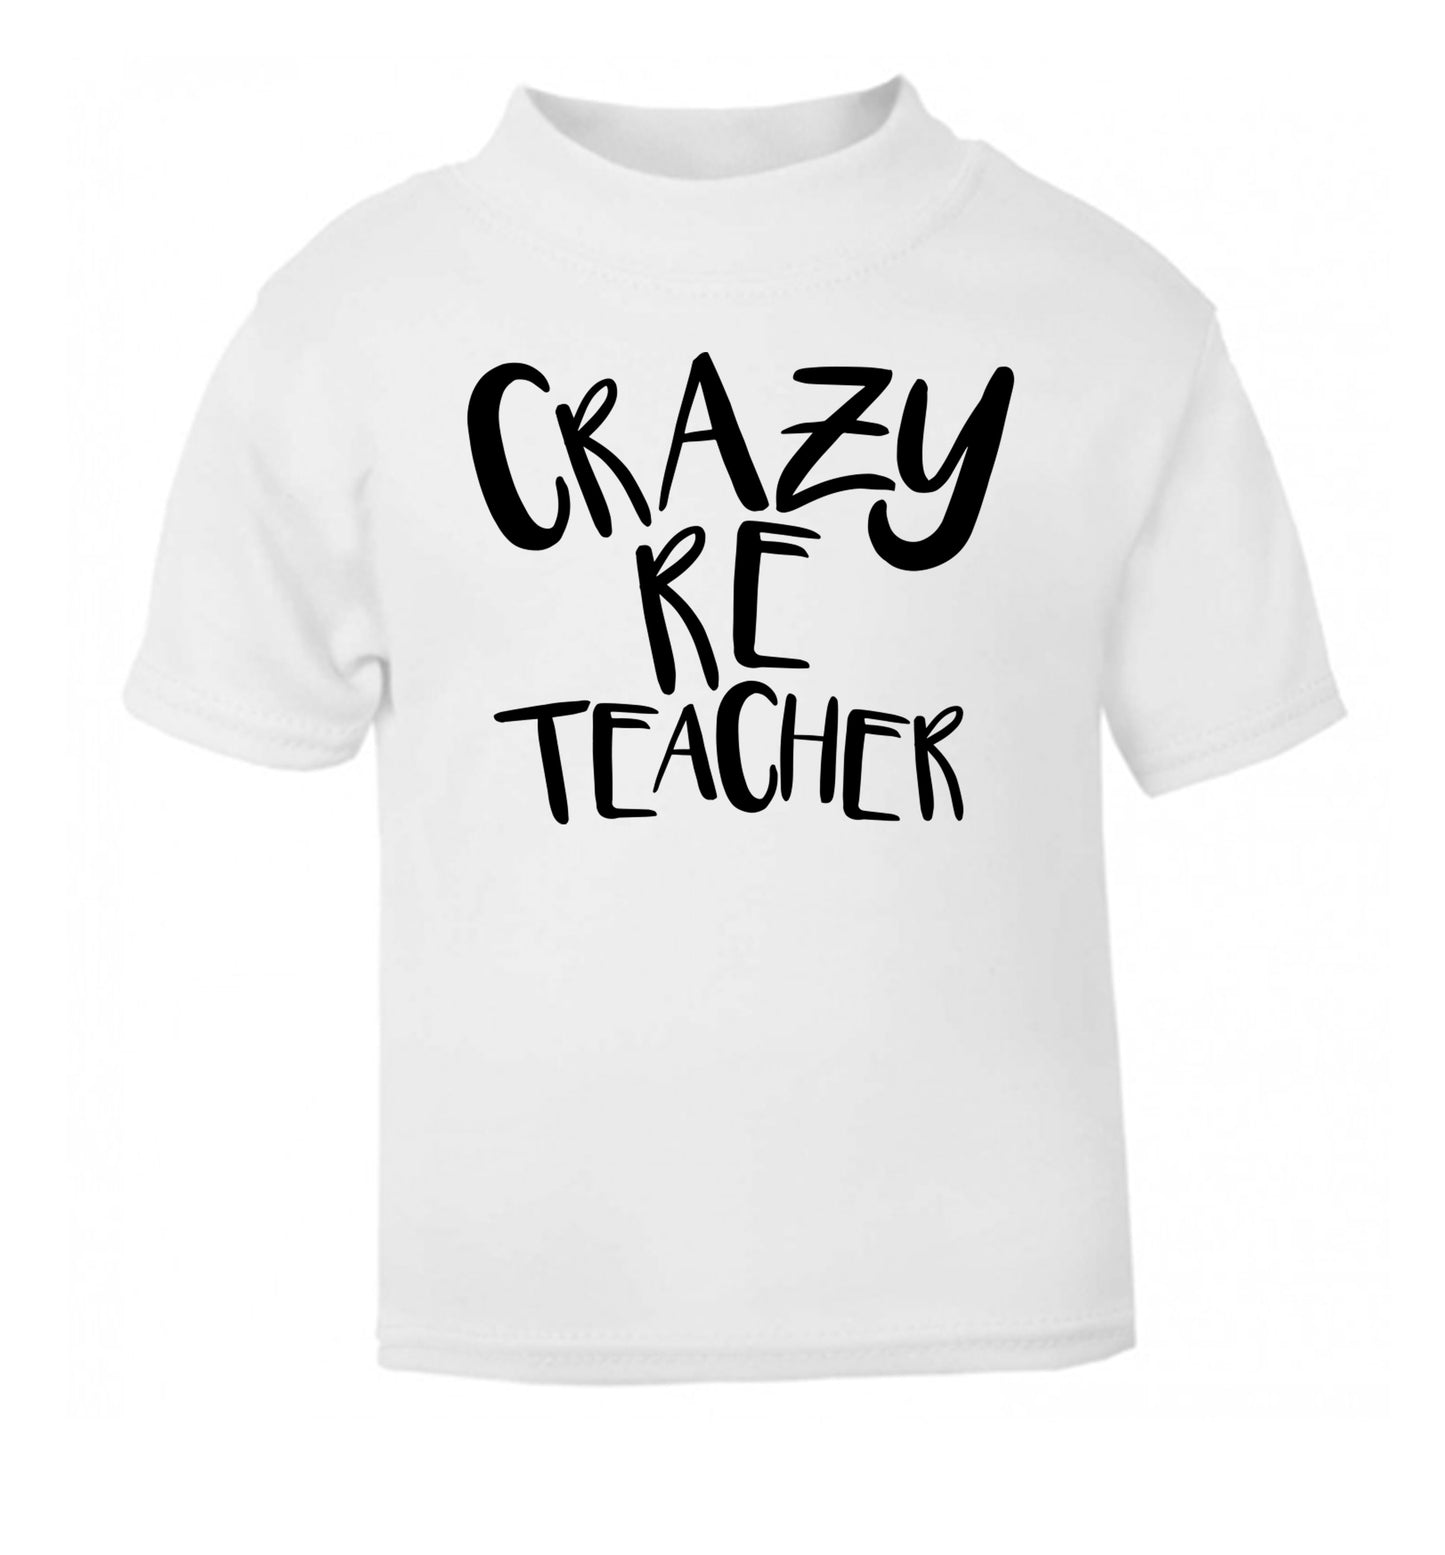 Crazy RE teacher white Baby Toddler Tshirt 2 Years